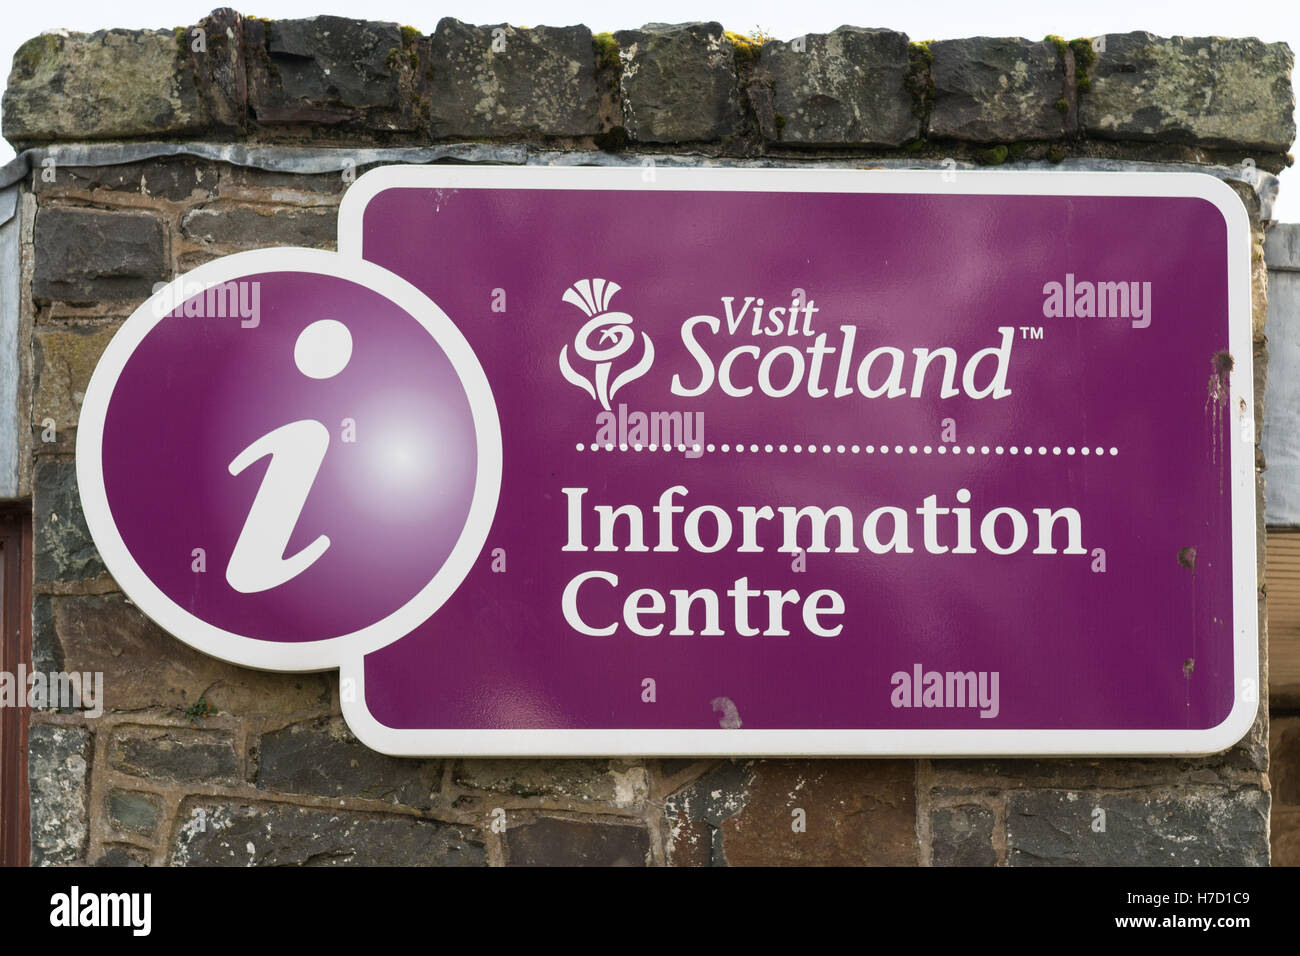 Icenter - Visit Scotland Information Center segno Foto Stock